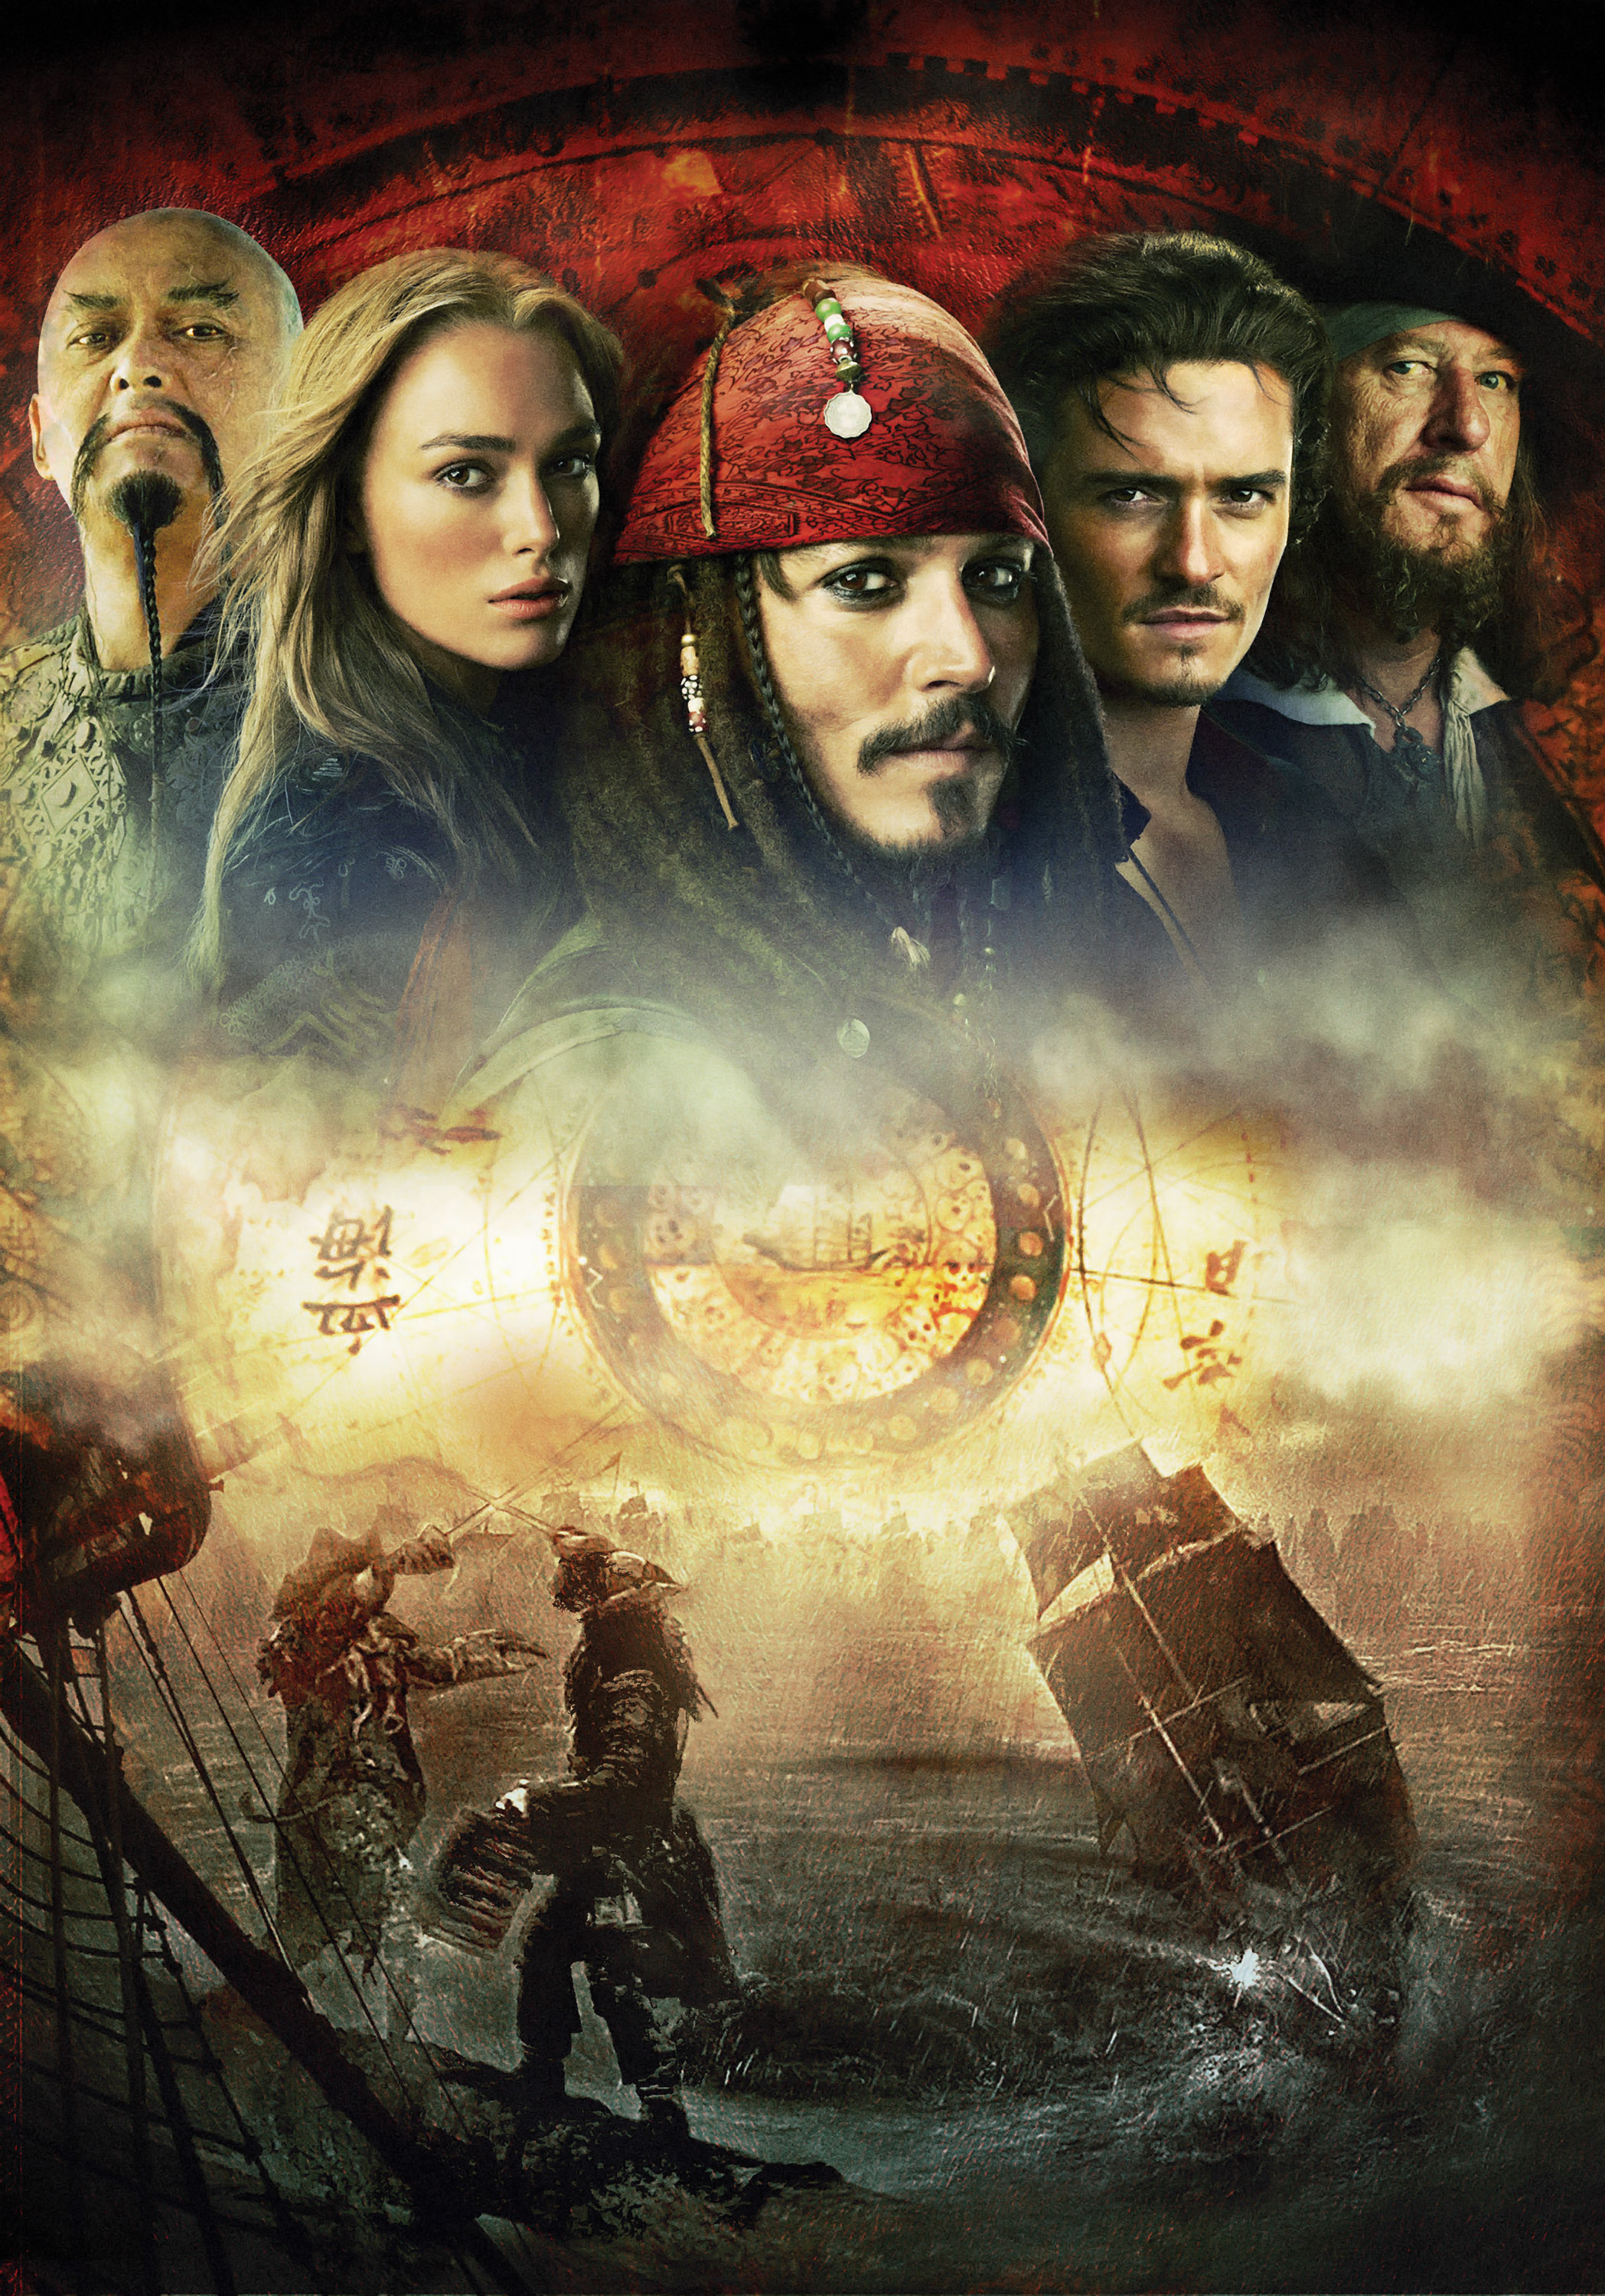 pirates of carabian 1 hindi dubbed moviemad 480p